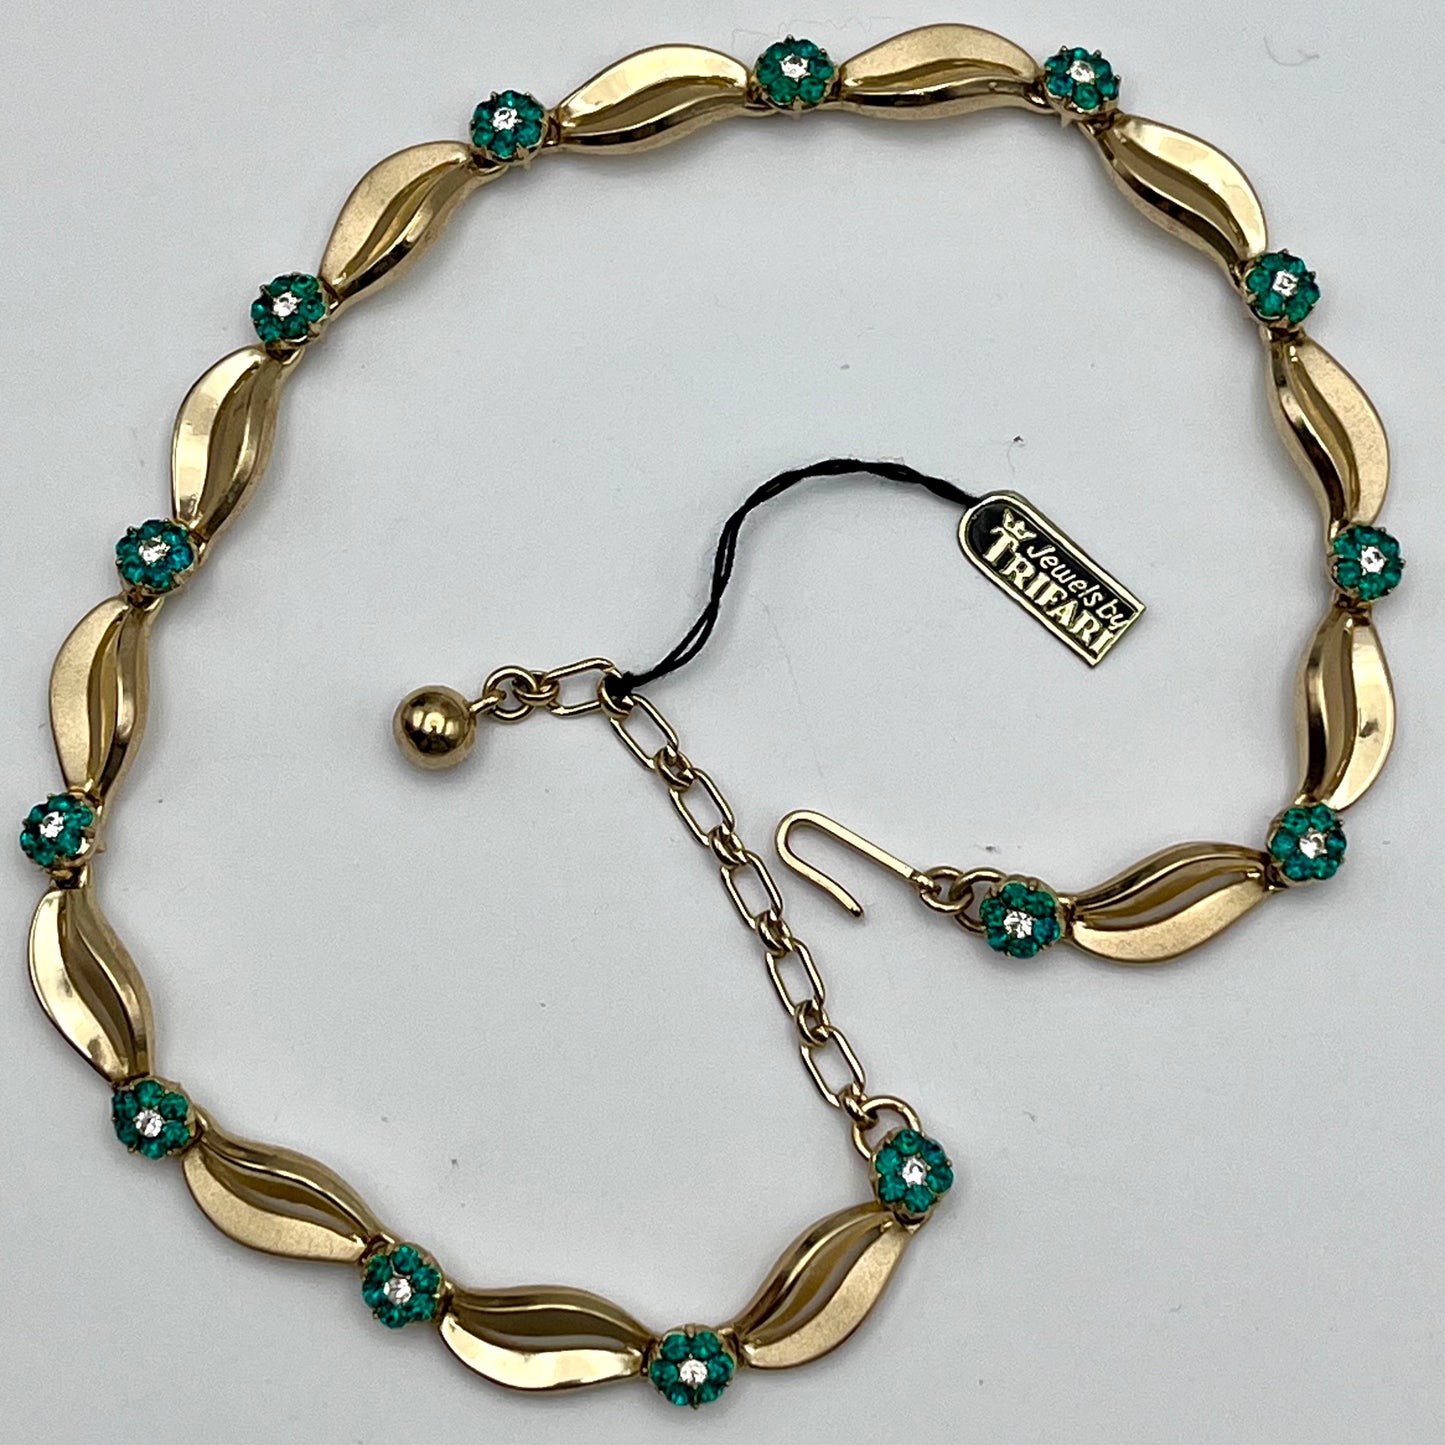 Early 1950s Trifari Rhinestone Necklace with Original Tag